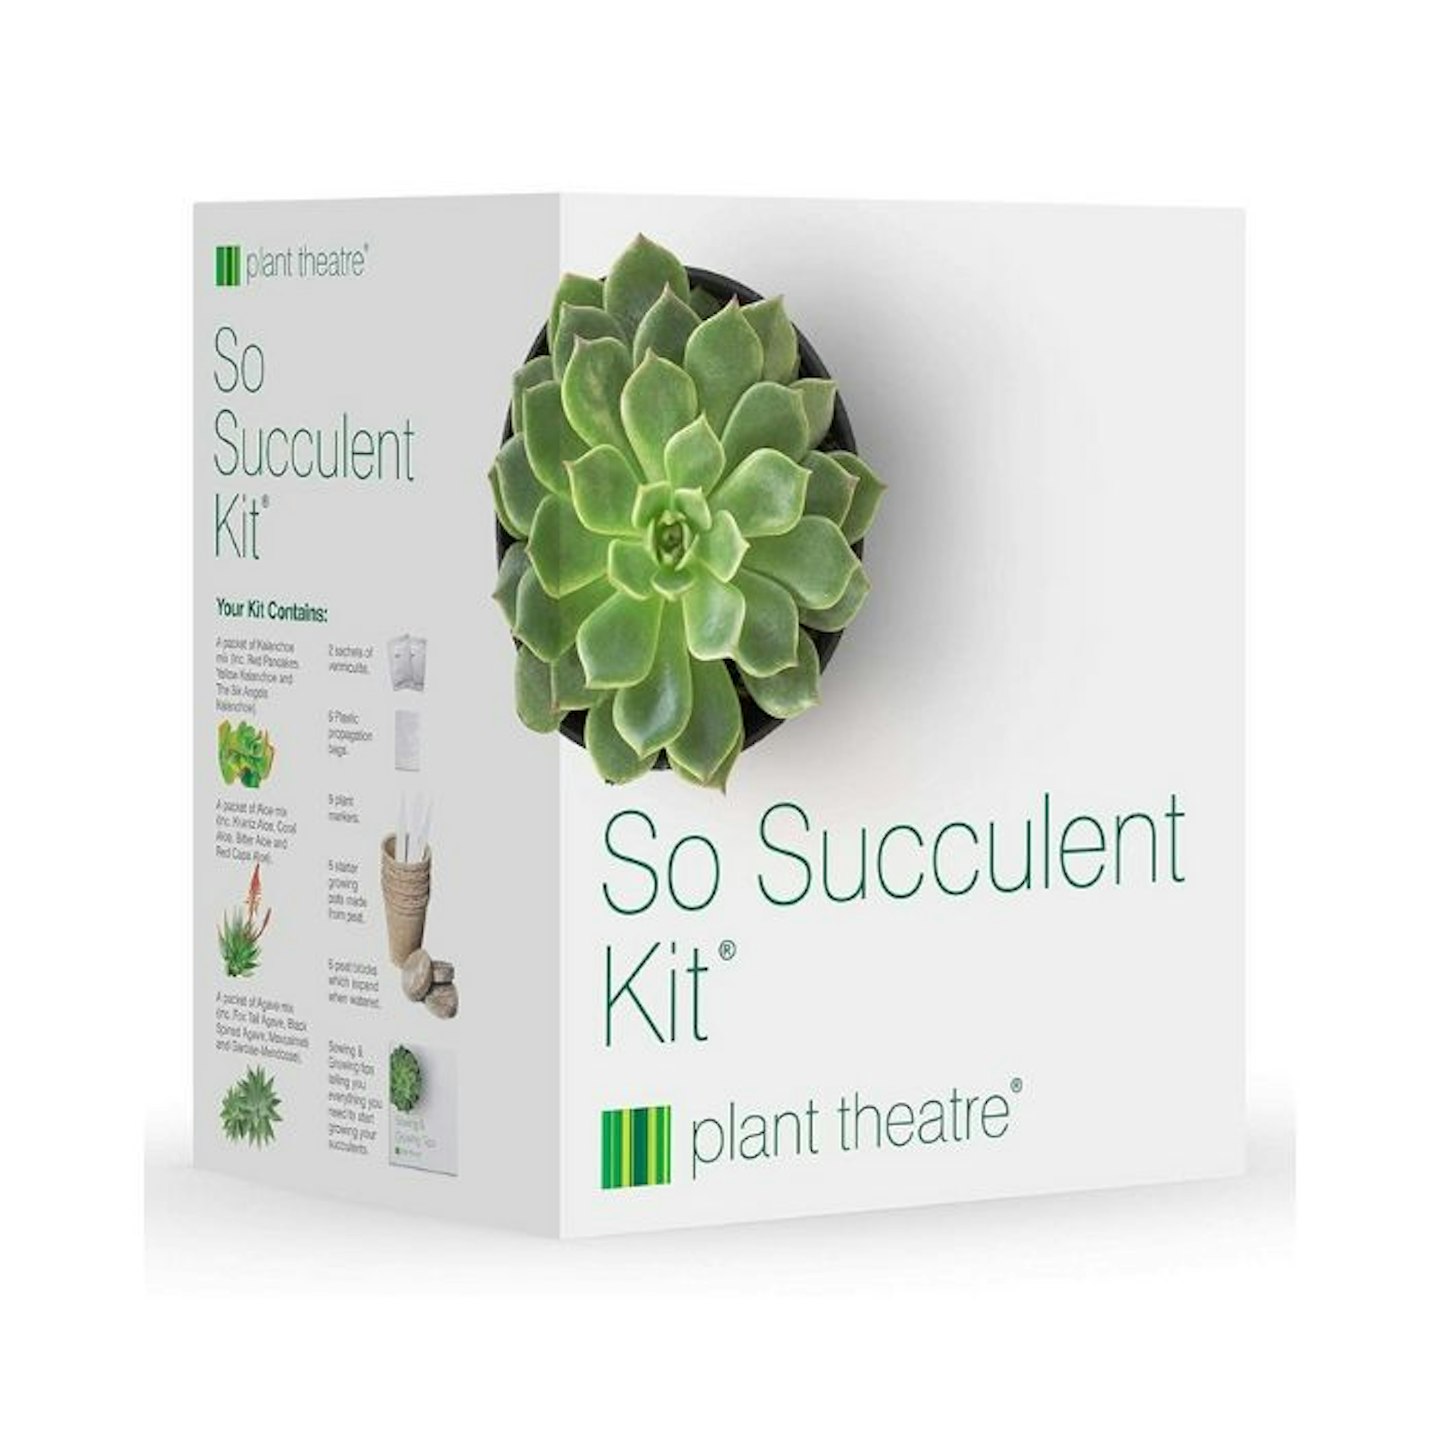 So Succulent Kit